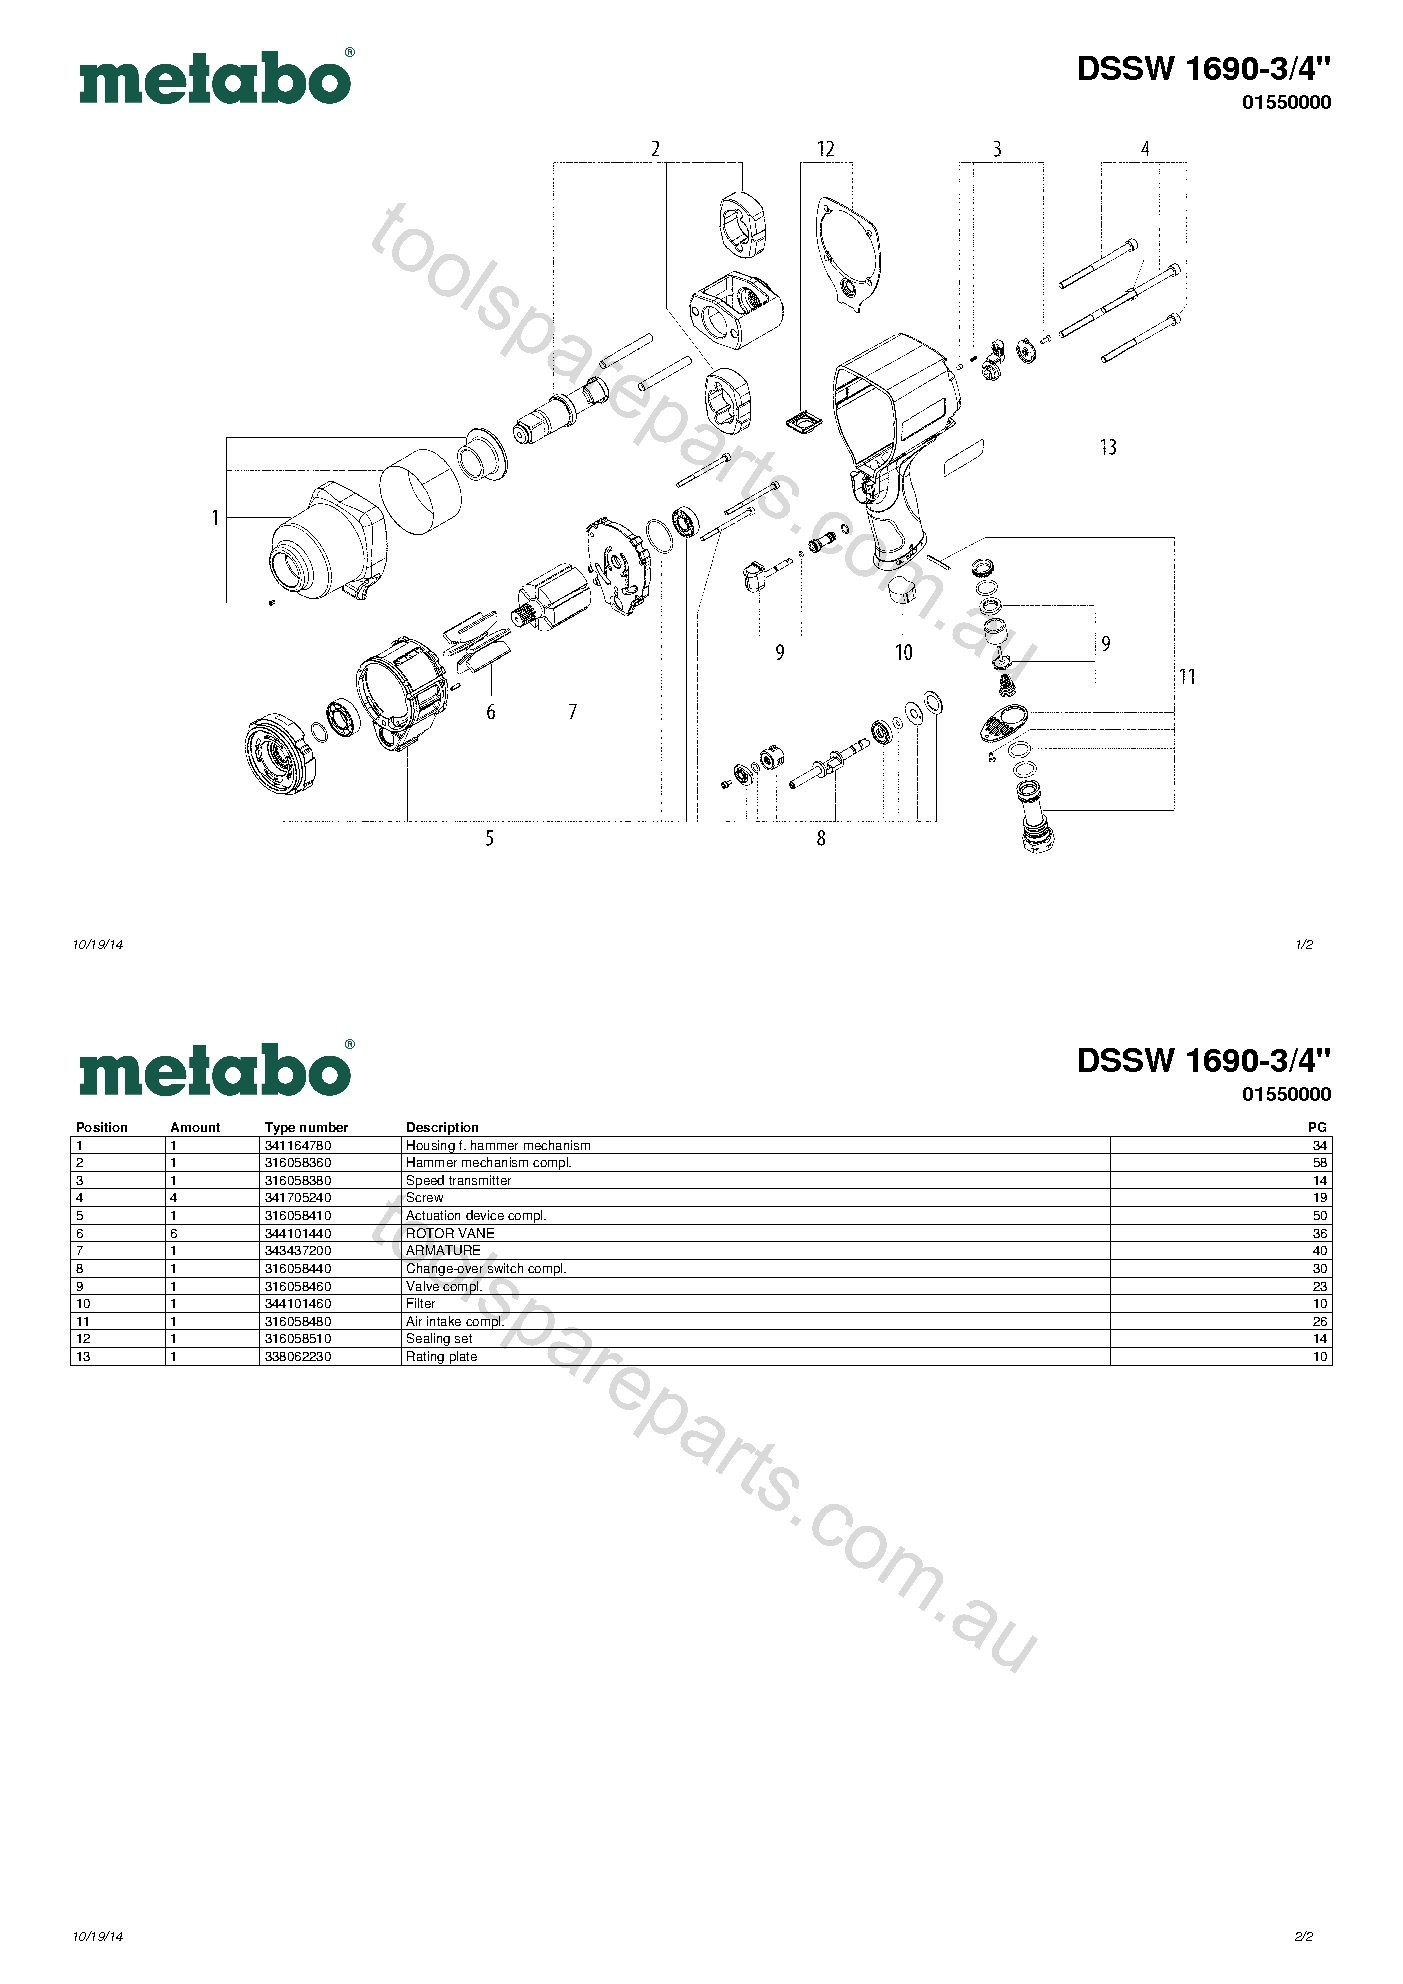 Metabo DSSW 1690-3/4